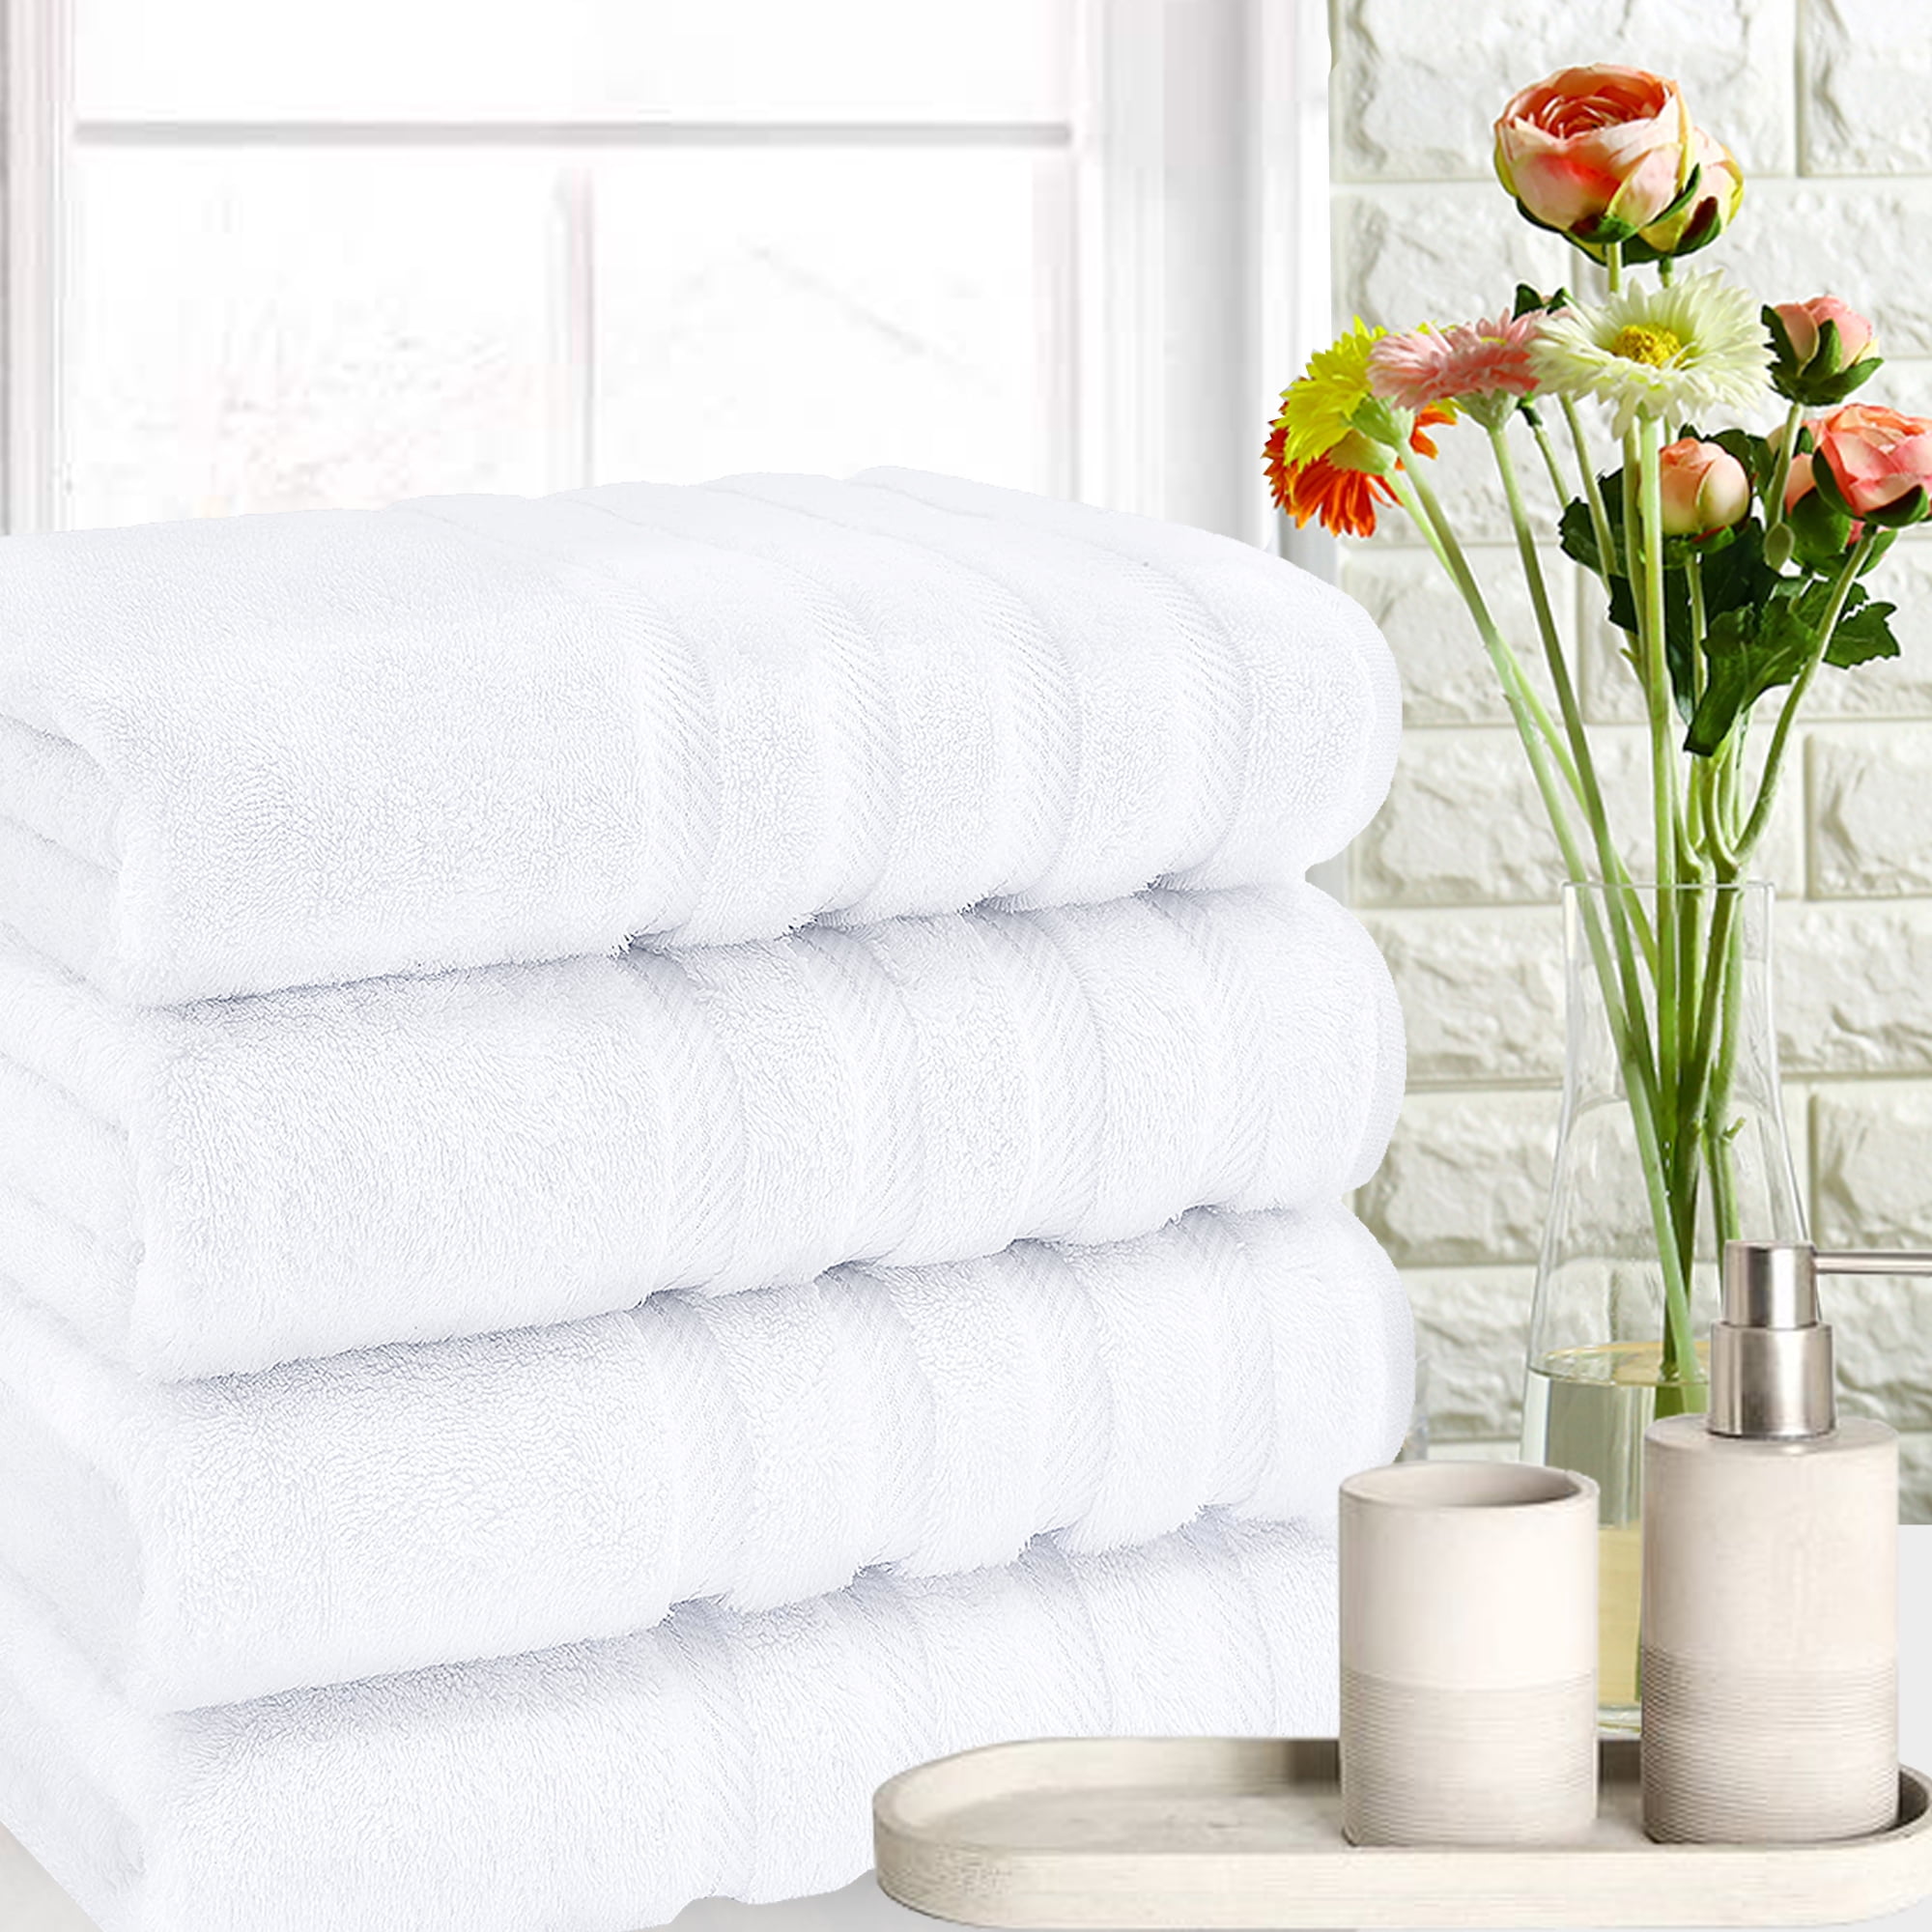 American Soft Linen Bath Towels 100% Turkish Cotton 4 Piece Luxury Bath  Towel Sets for Bathroom - Sand Taupe 